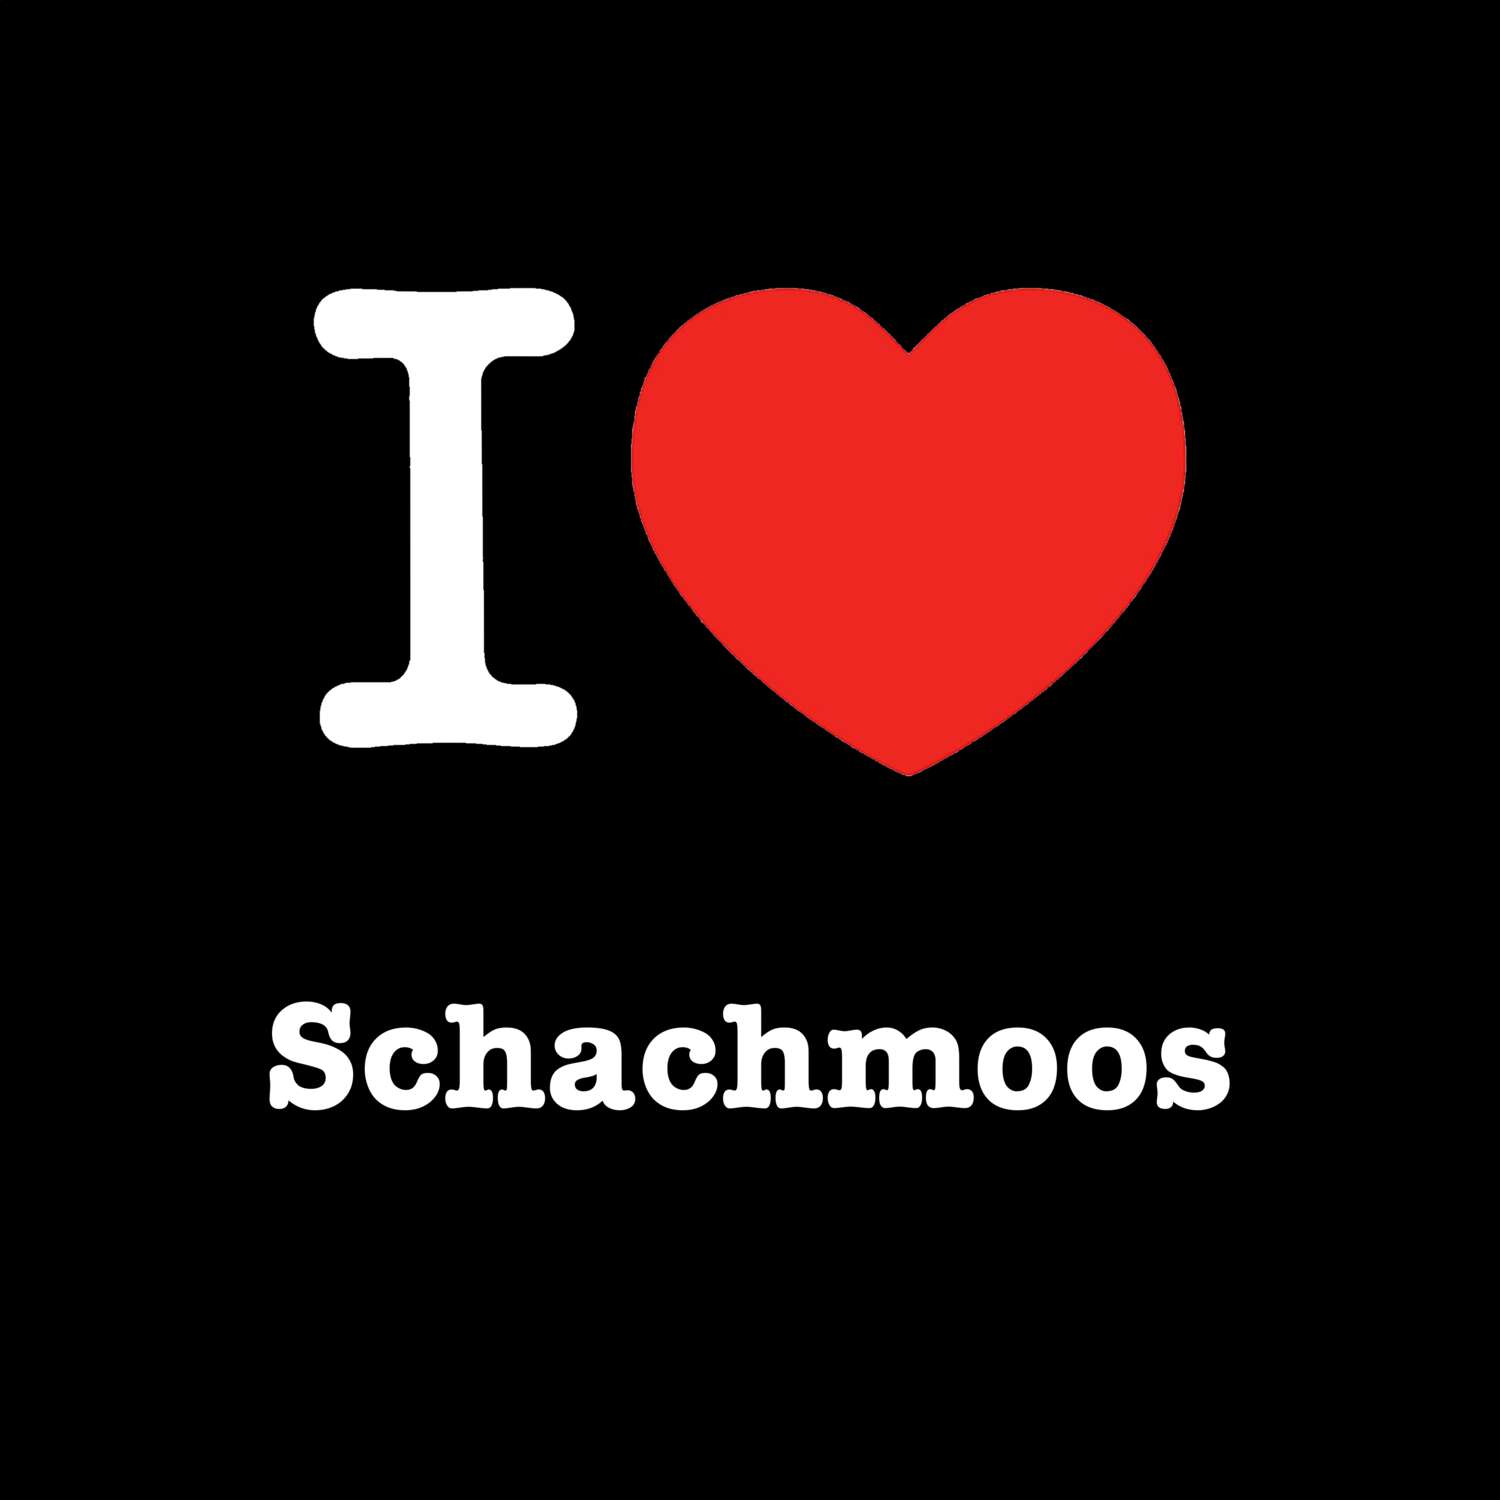 Schachmoos T-Shirt »I love«